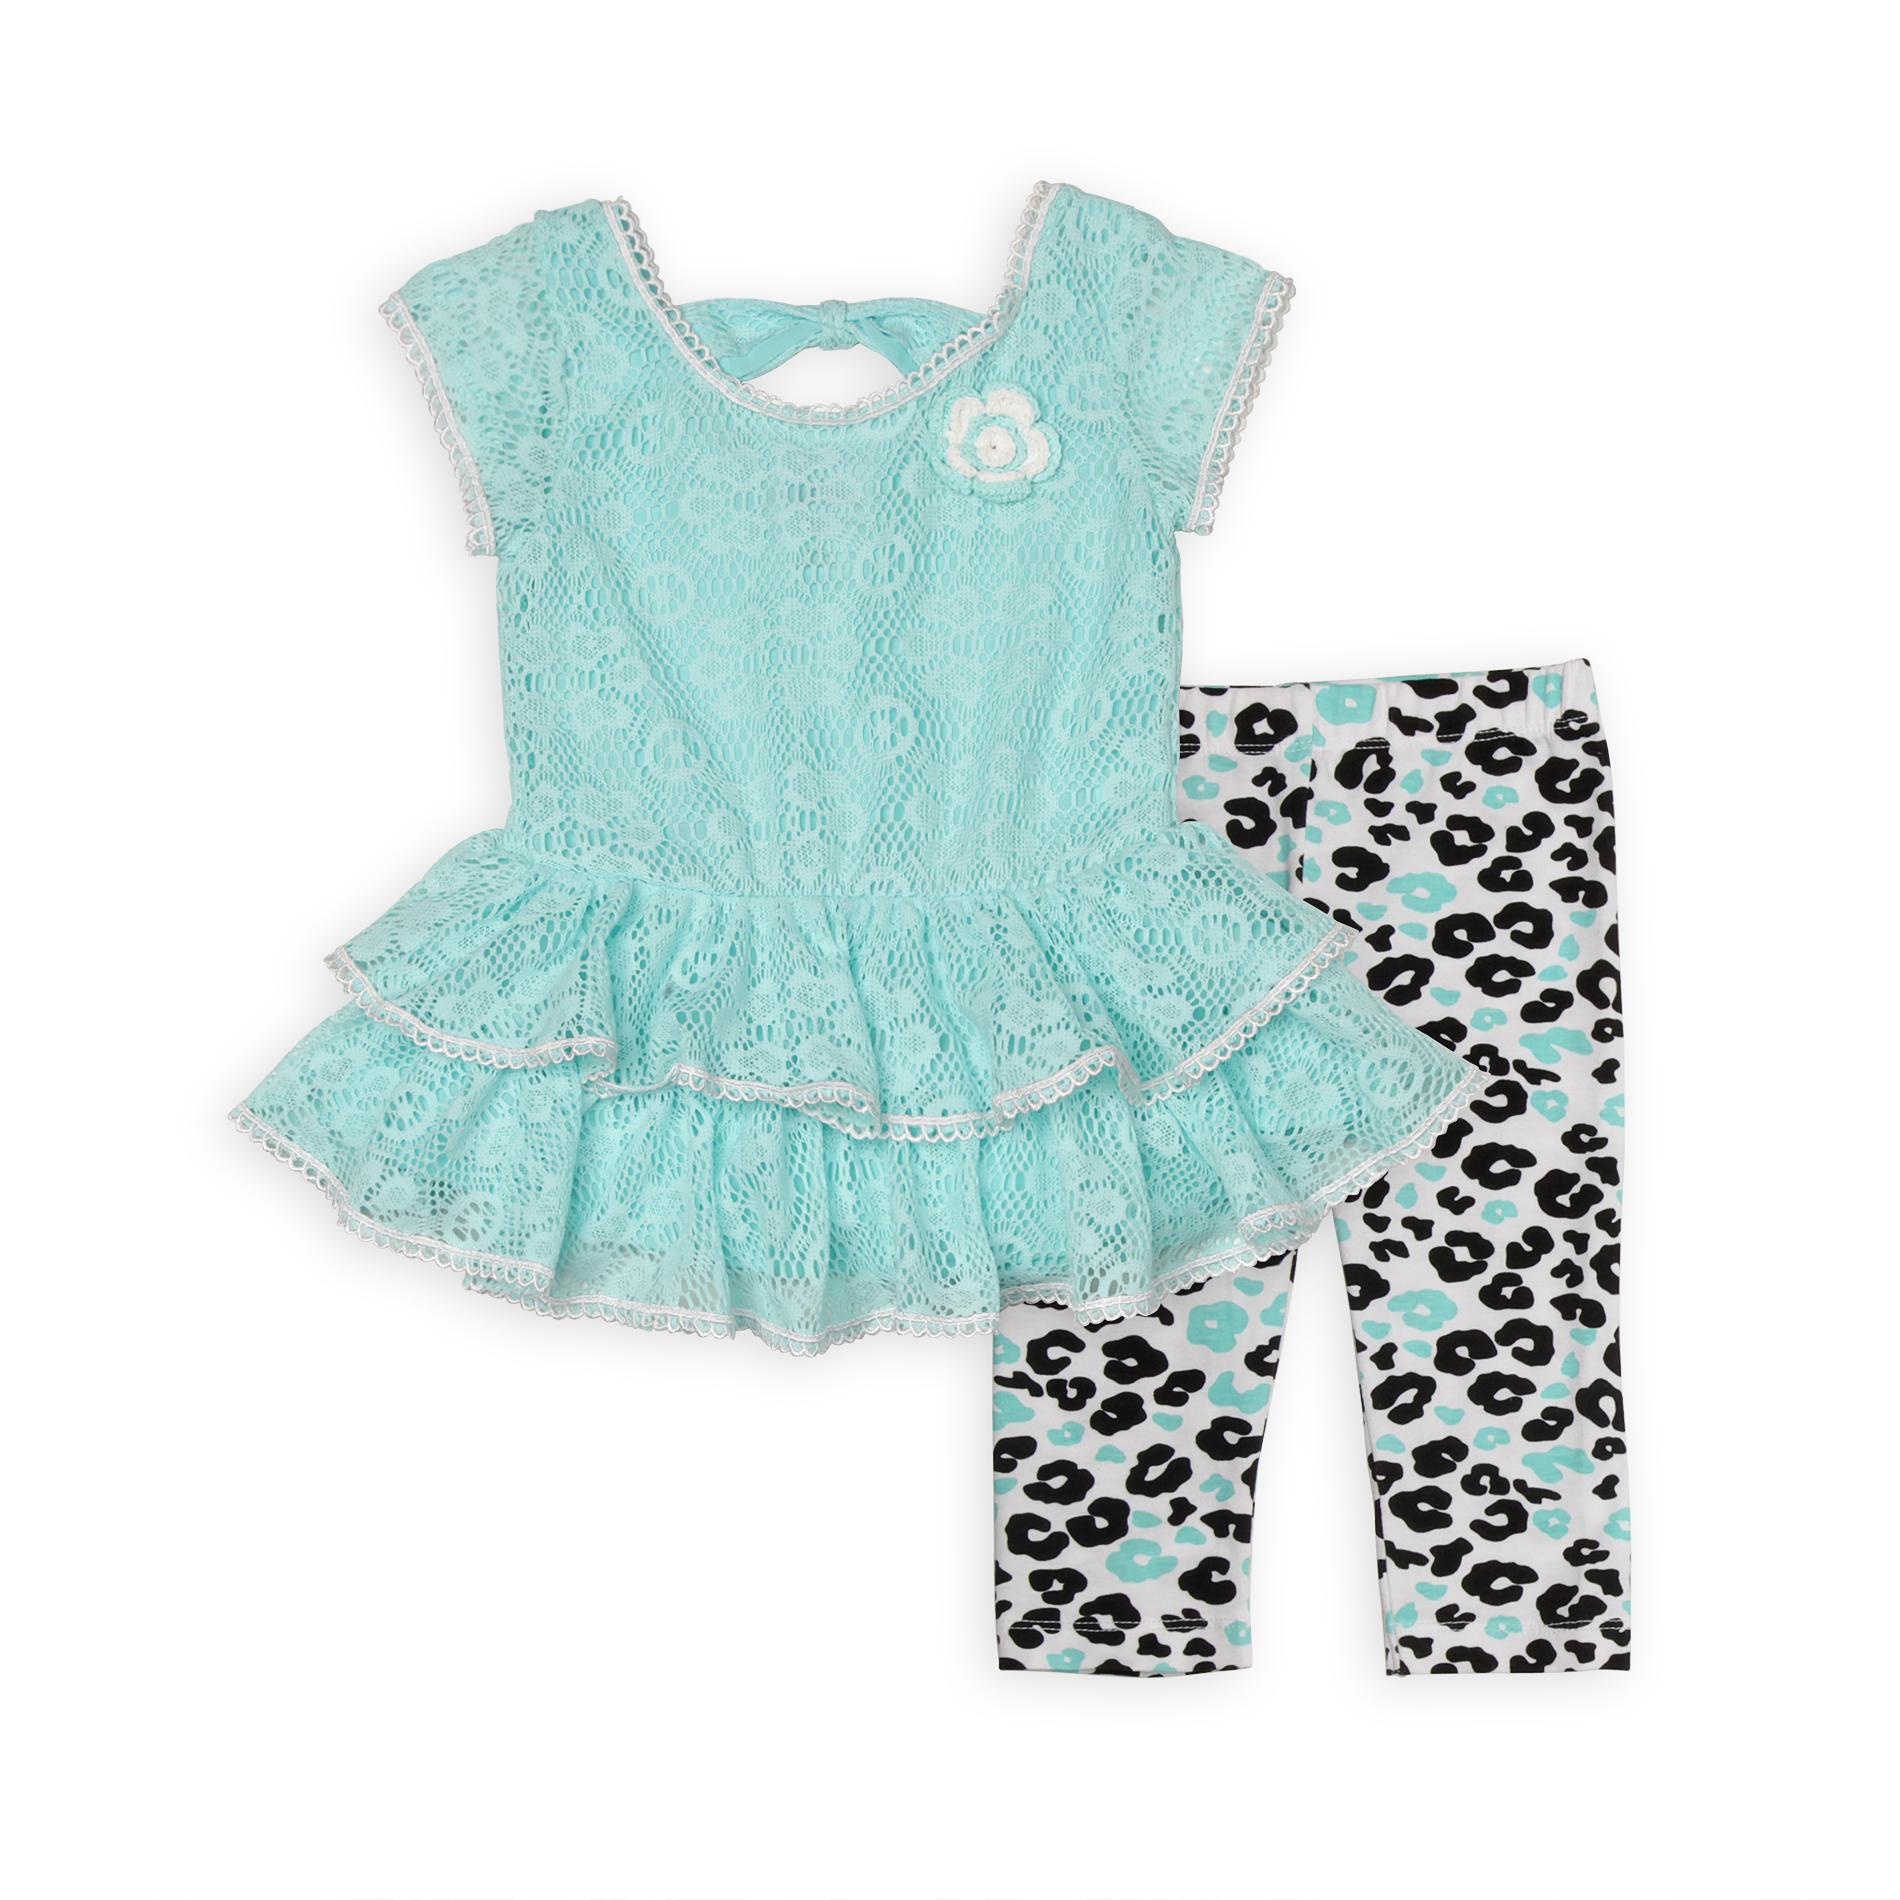 Little Lass Infant & Toddler Girl's Lace Tunic & Leggings - Leopard Print